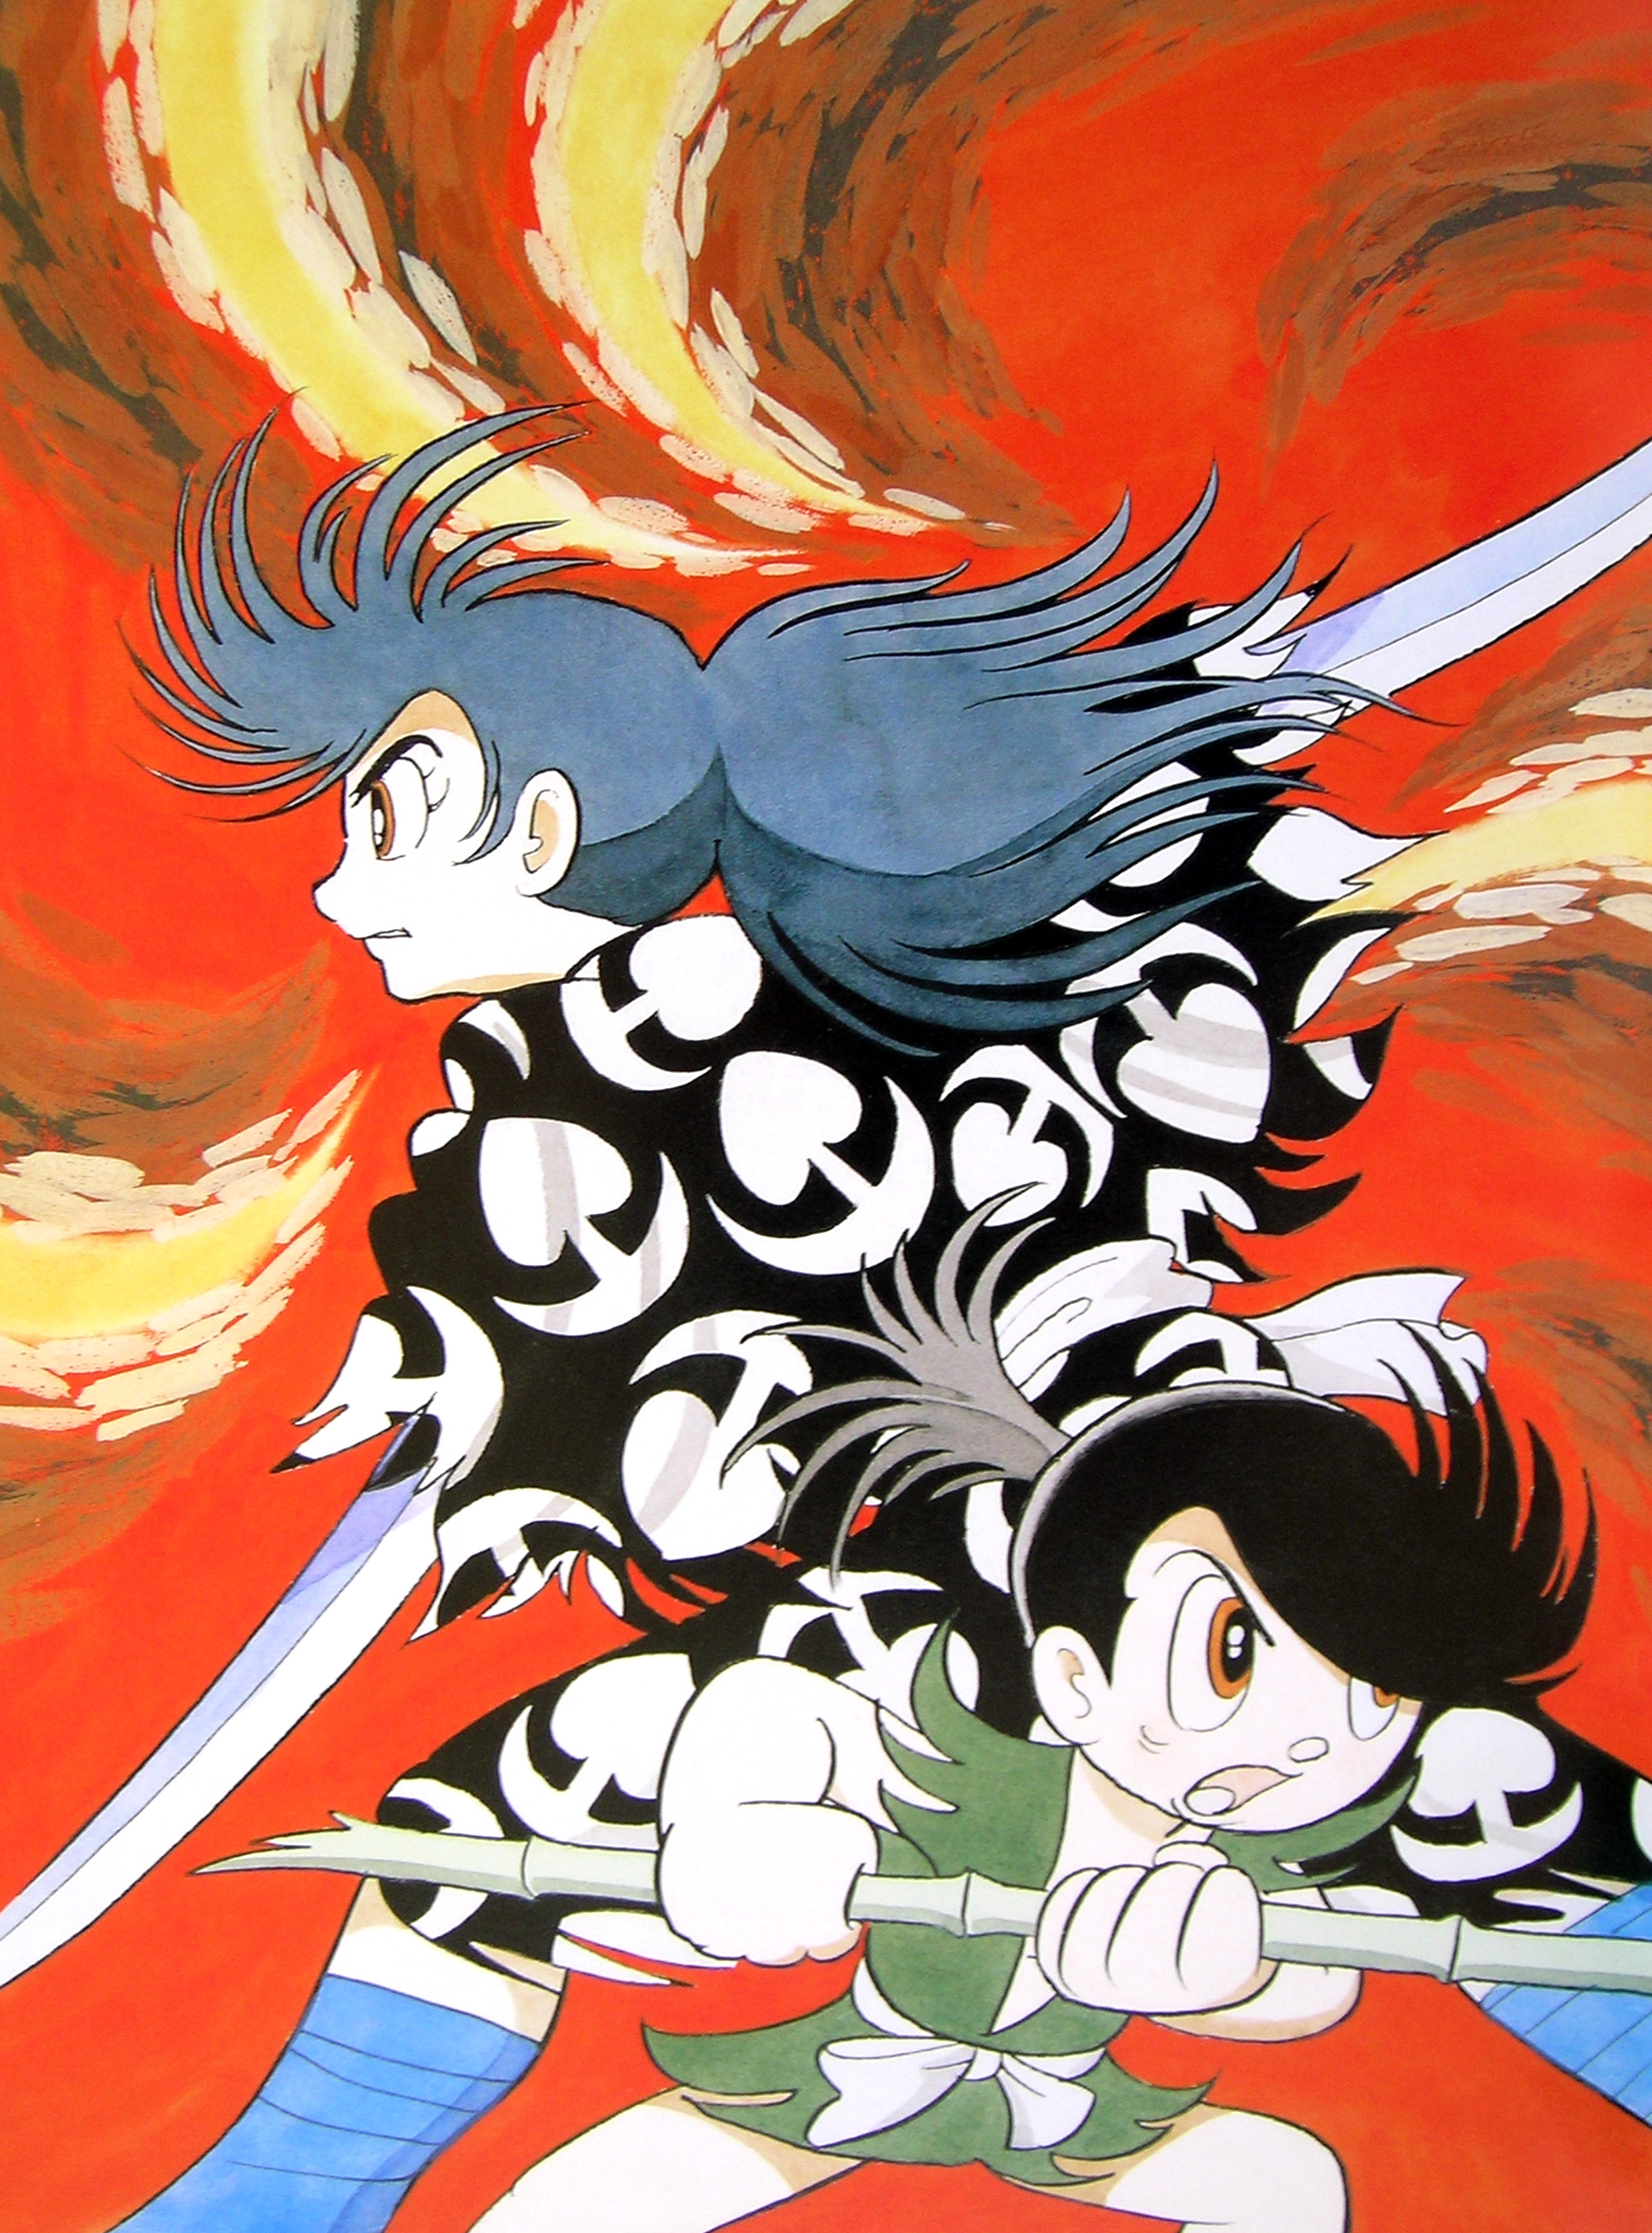 Dororo (Manga) | Osamu Tezuka Wiki | FANDOM powered by Wikia